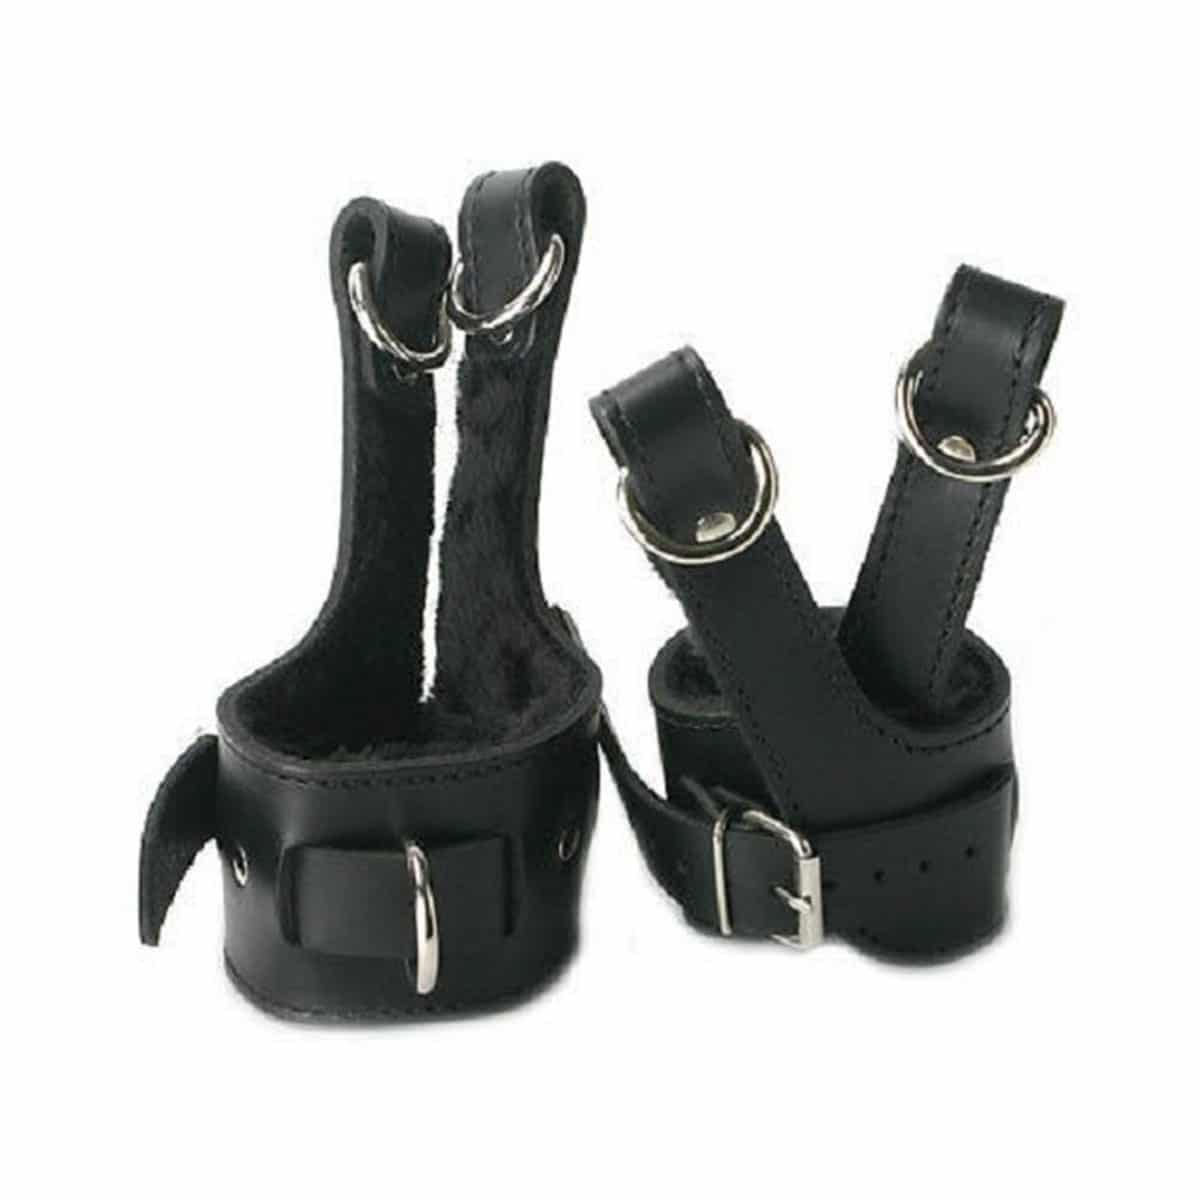 Leather Ankle Or Wrist Suspension Cuffs- CUFF2